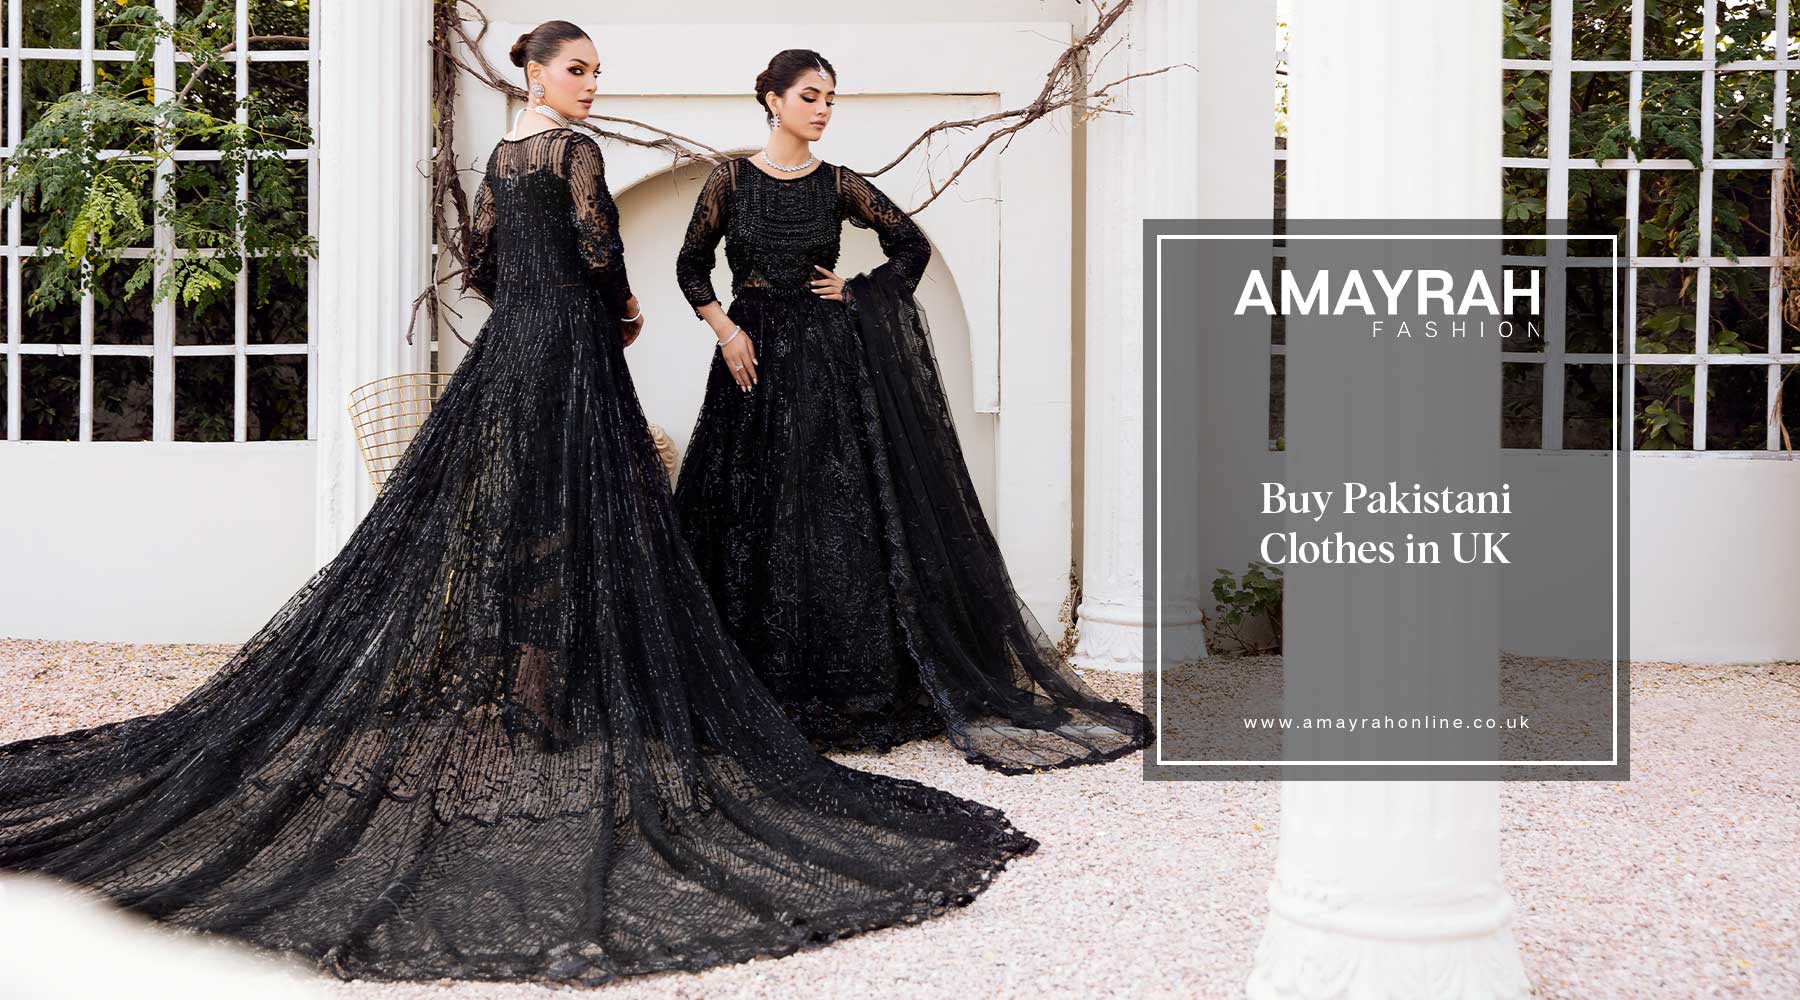 Embracing Pakistani Fashion in the UK with Amayrah Fashion